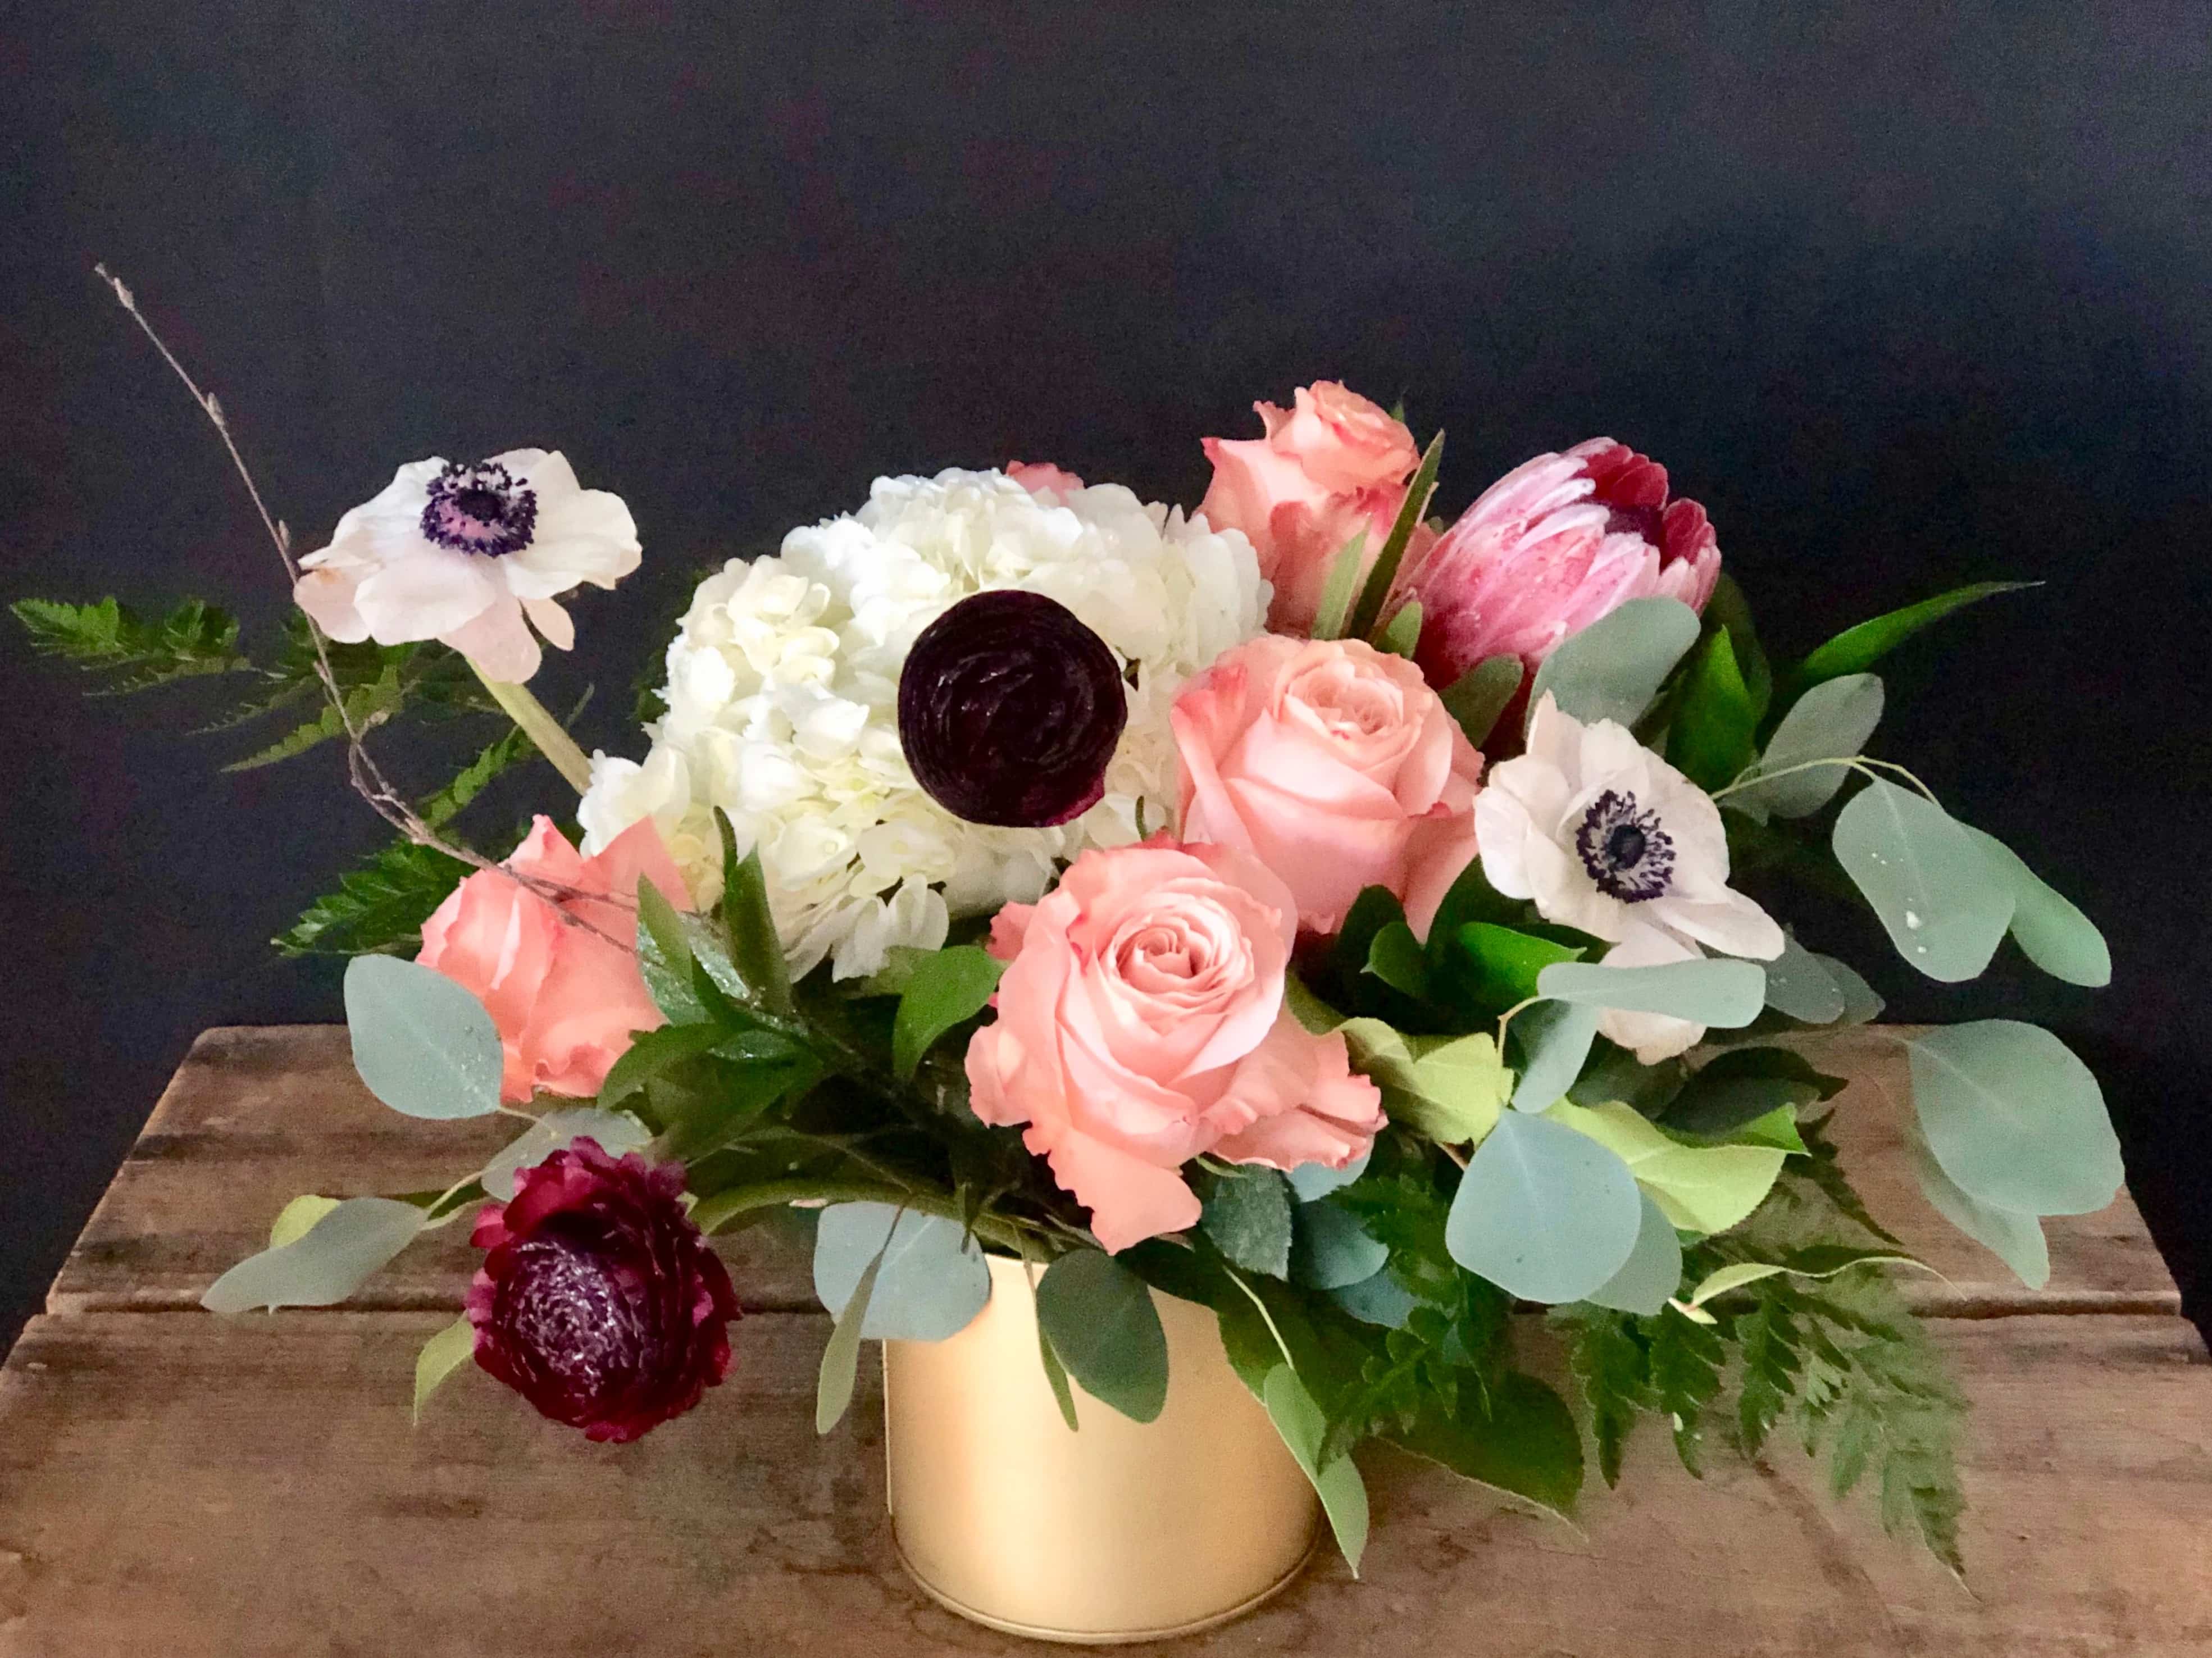 Thistle and Bloom - Chandler, AZ, US, white flower arrangements